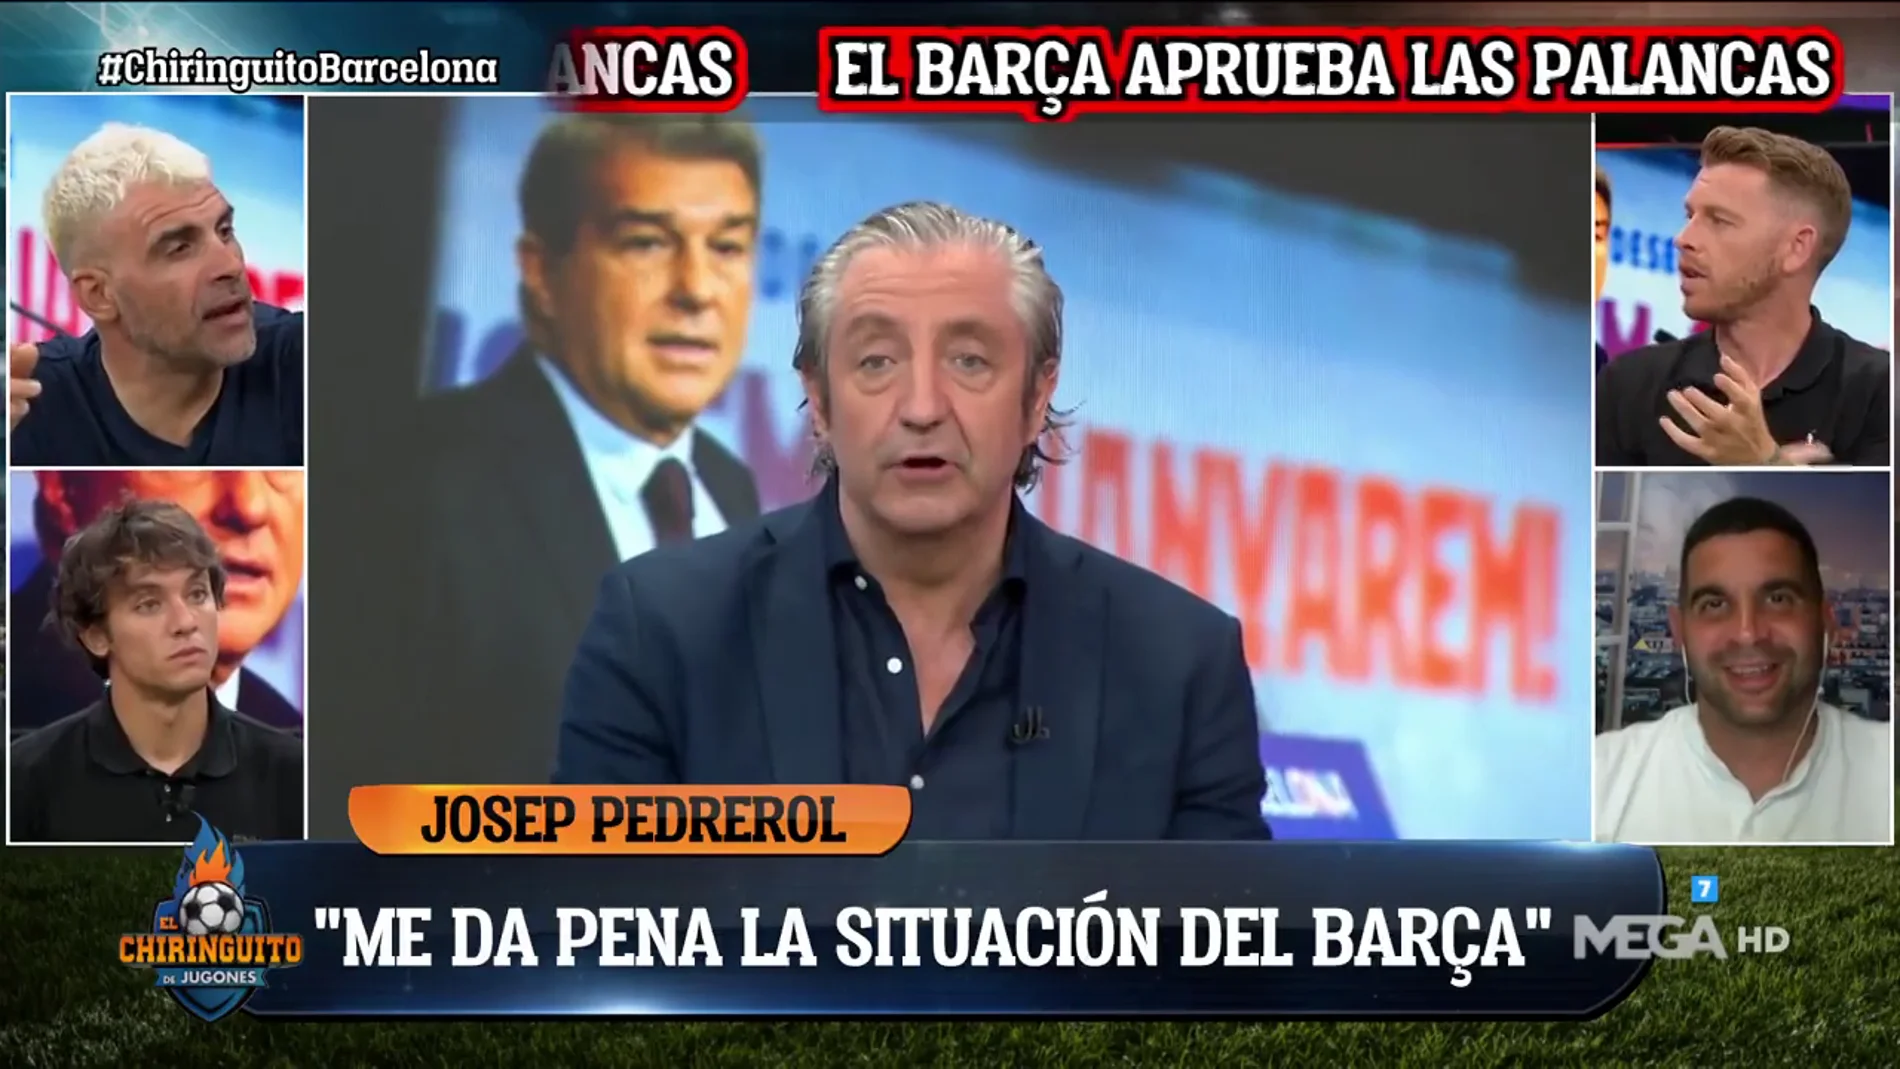 Josep Pedrerol: "Me da pena la situación del Barça"